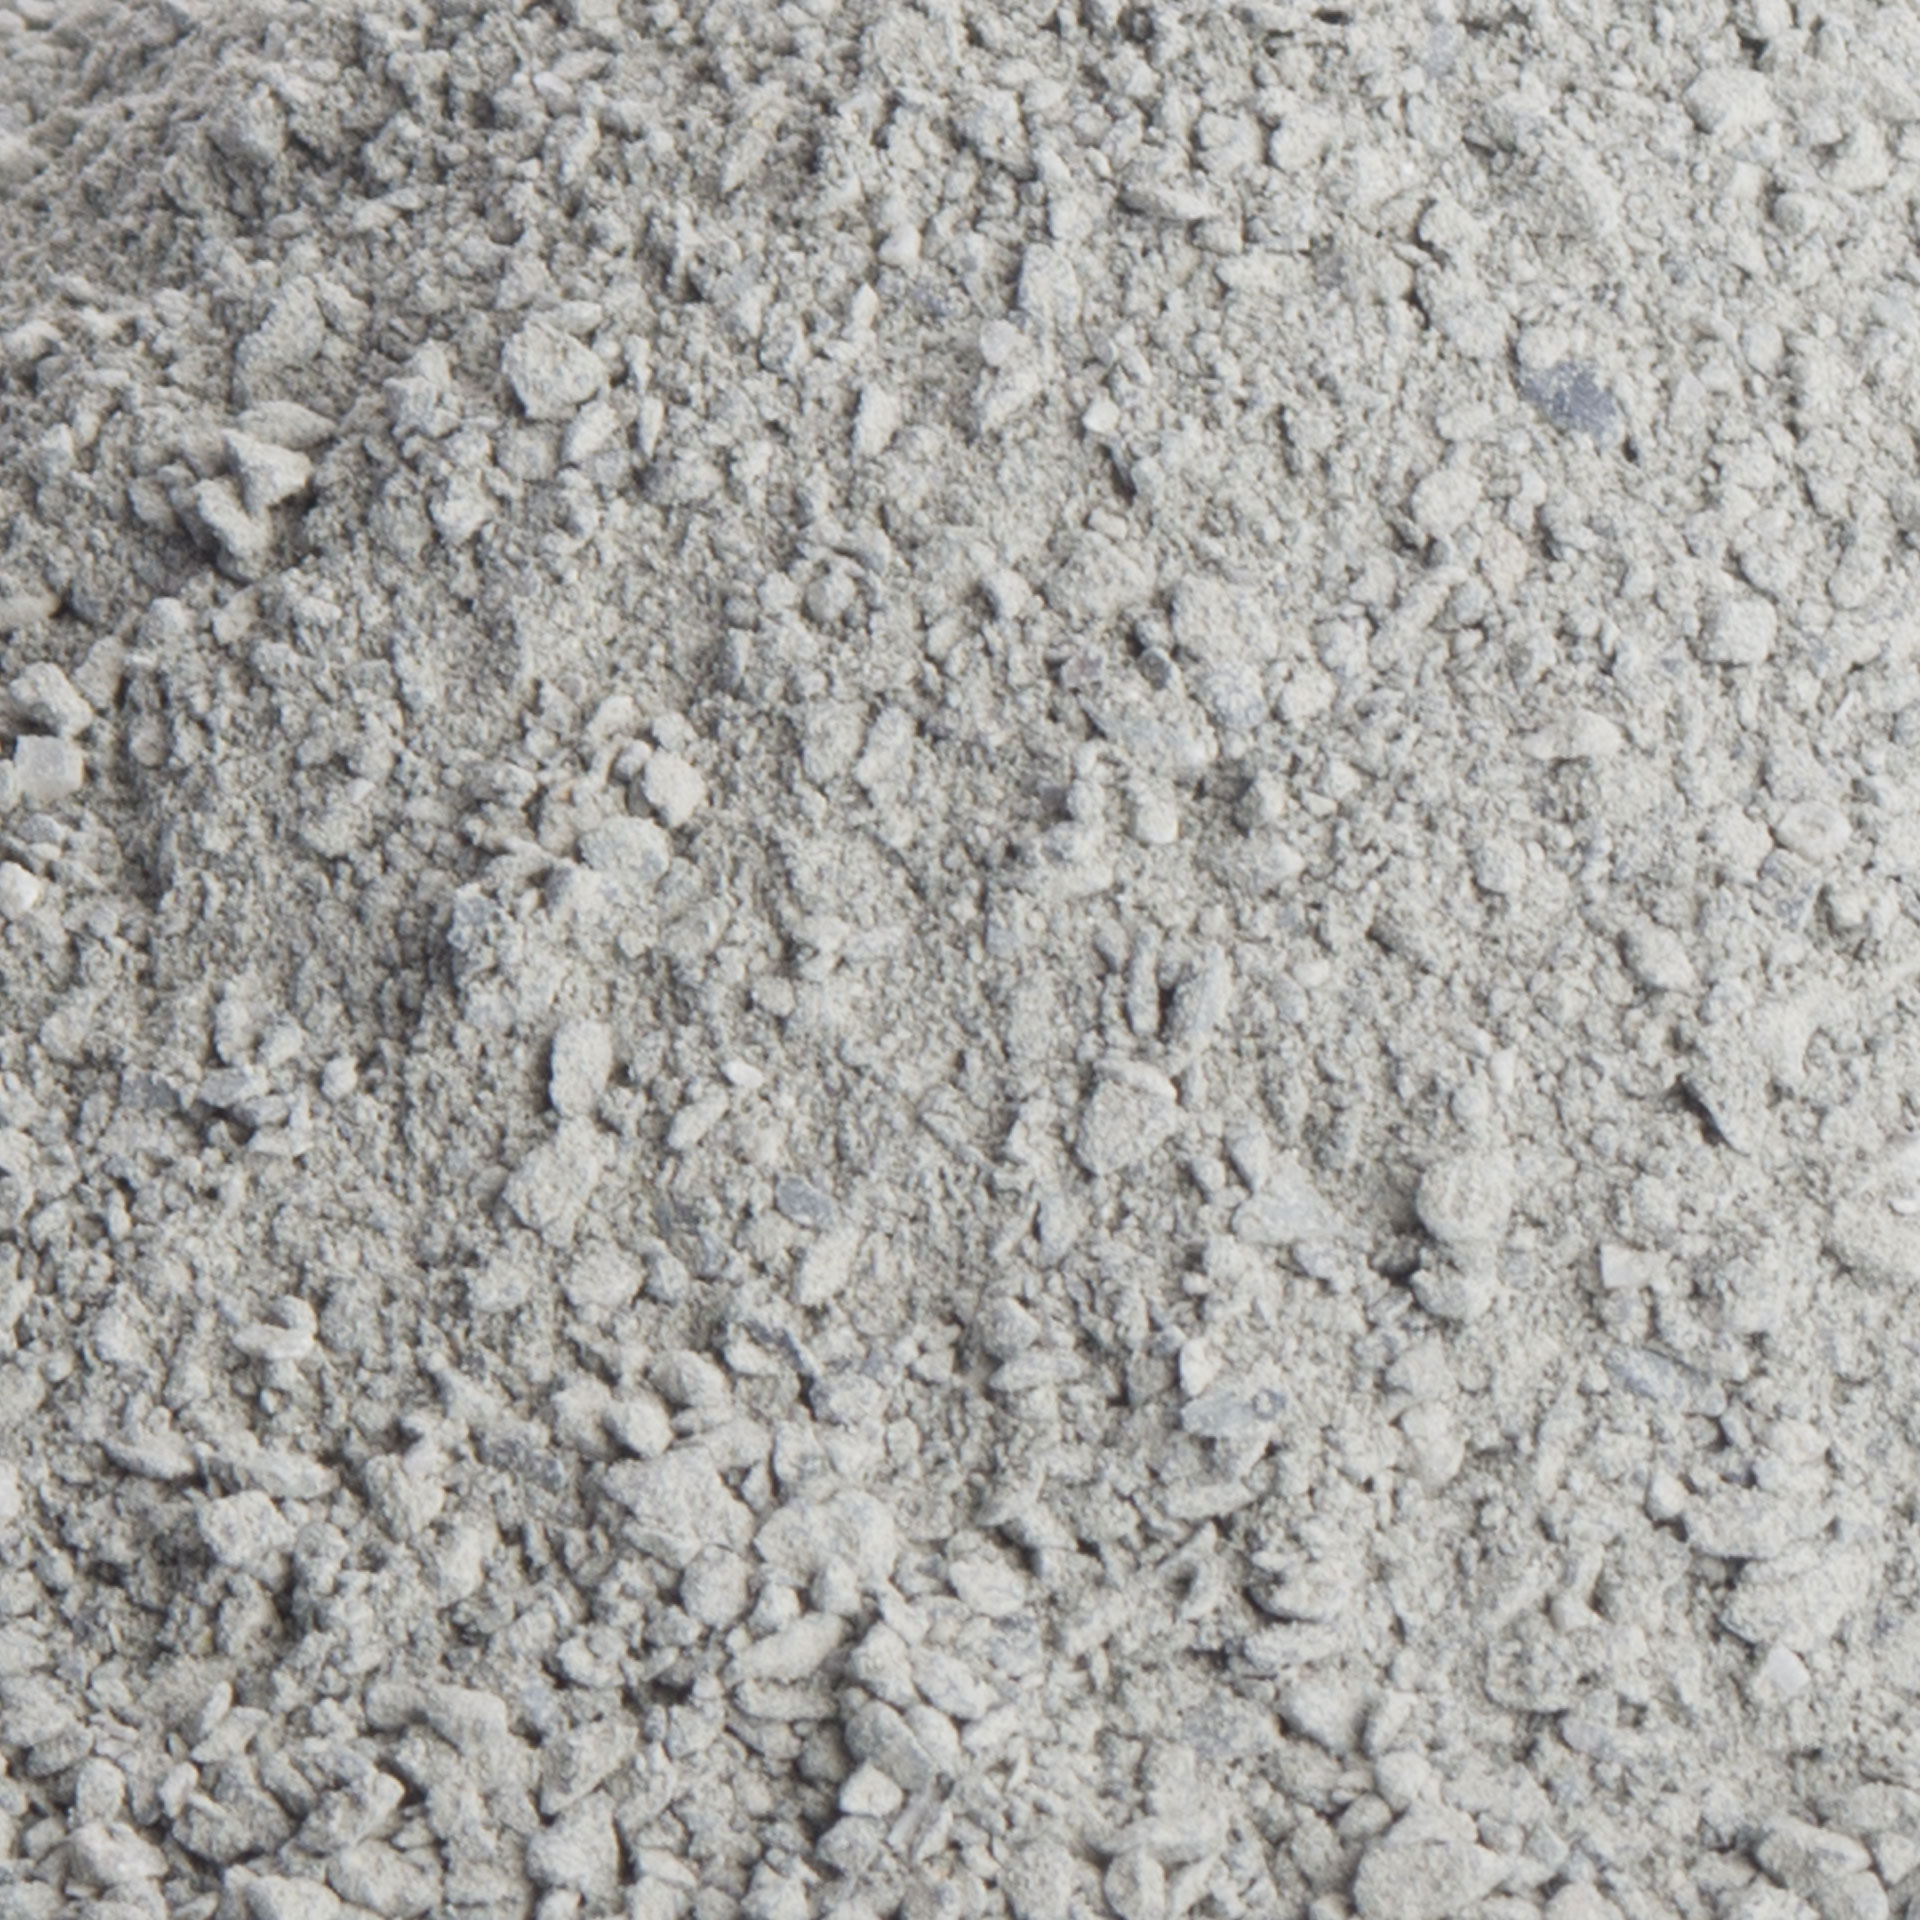 0,61€/kg 25 kg Bitumeneinstreu Dachpappen-Sand Puder Anstrich fein 